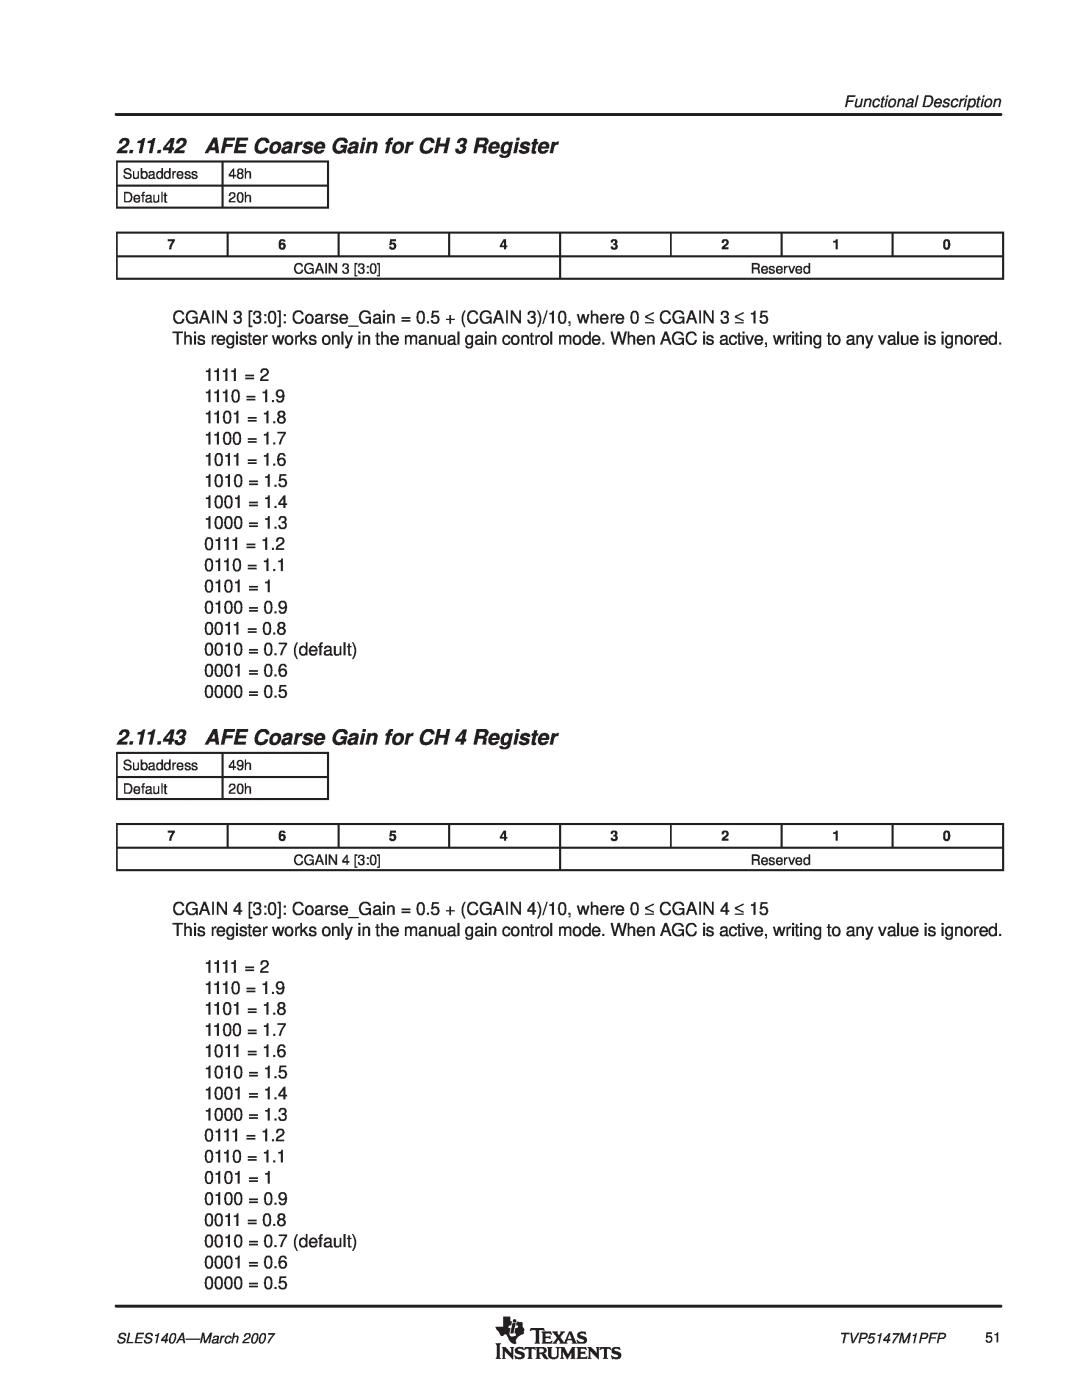 Texas Instruments TVP5147M1PFP manual AFE Coarse Gain for CH 3 Register, AFE Coarse Gain for CH 4 Register 